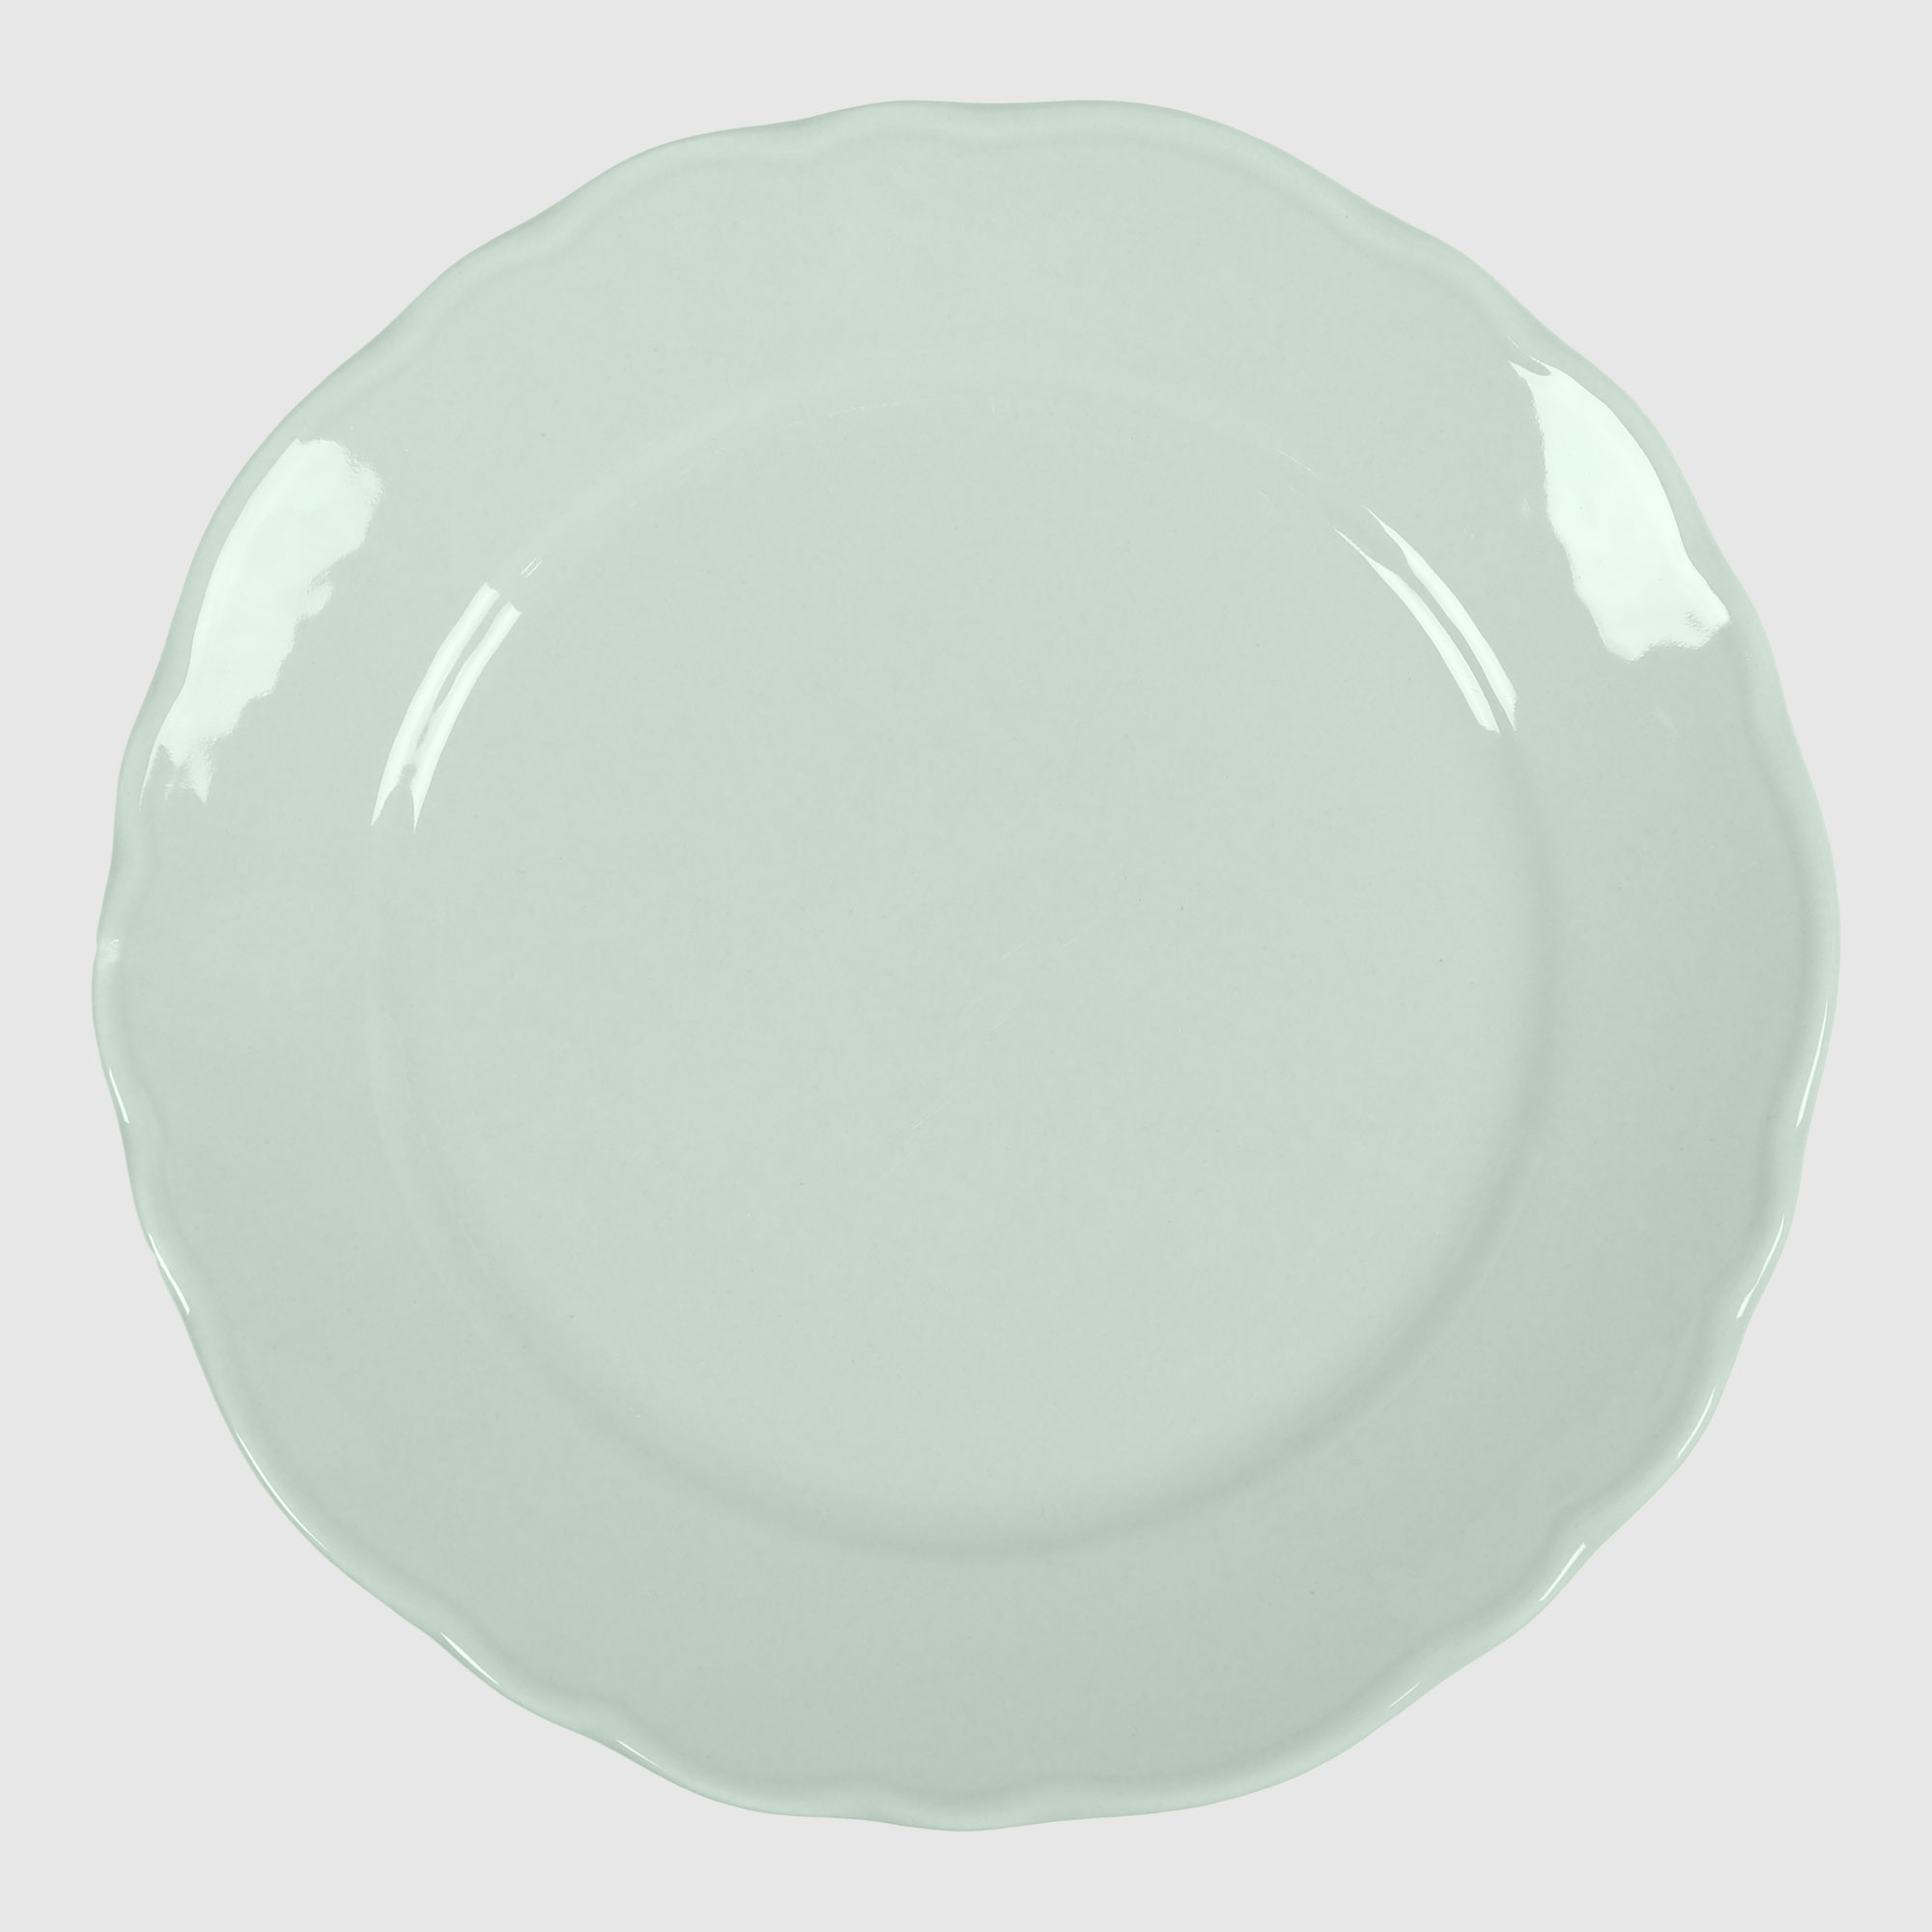 Тарелка Kutahya porselen Lar зелёная 19 см тарелка суповая 22 см kutahya porselen irem недекорированная